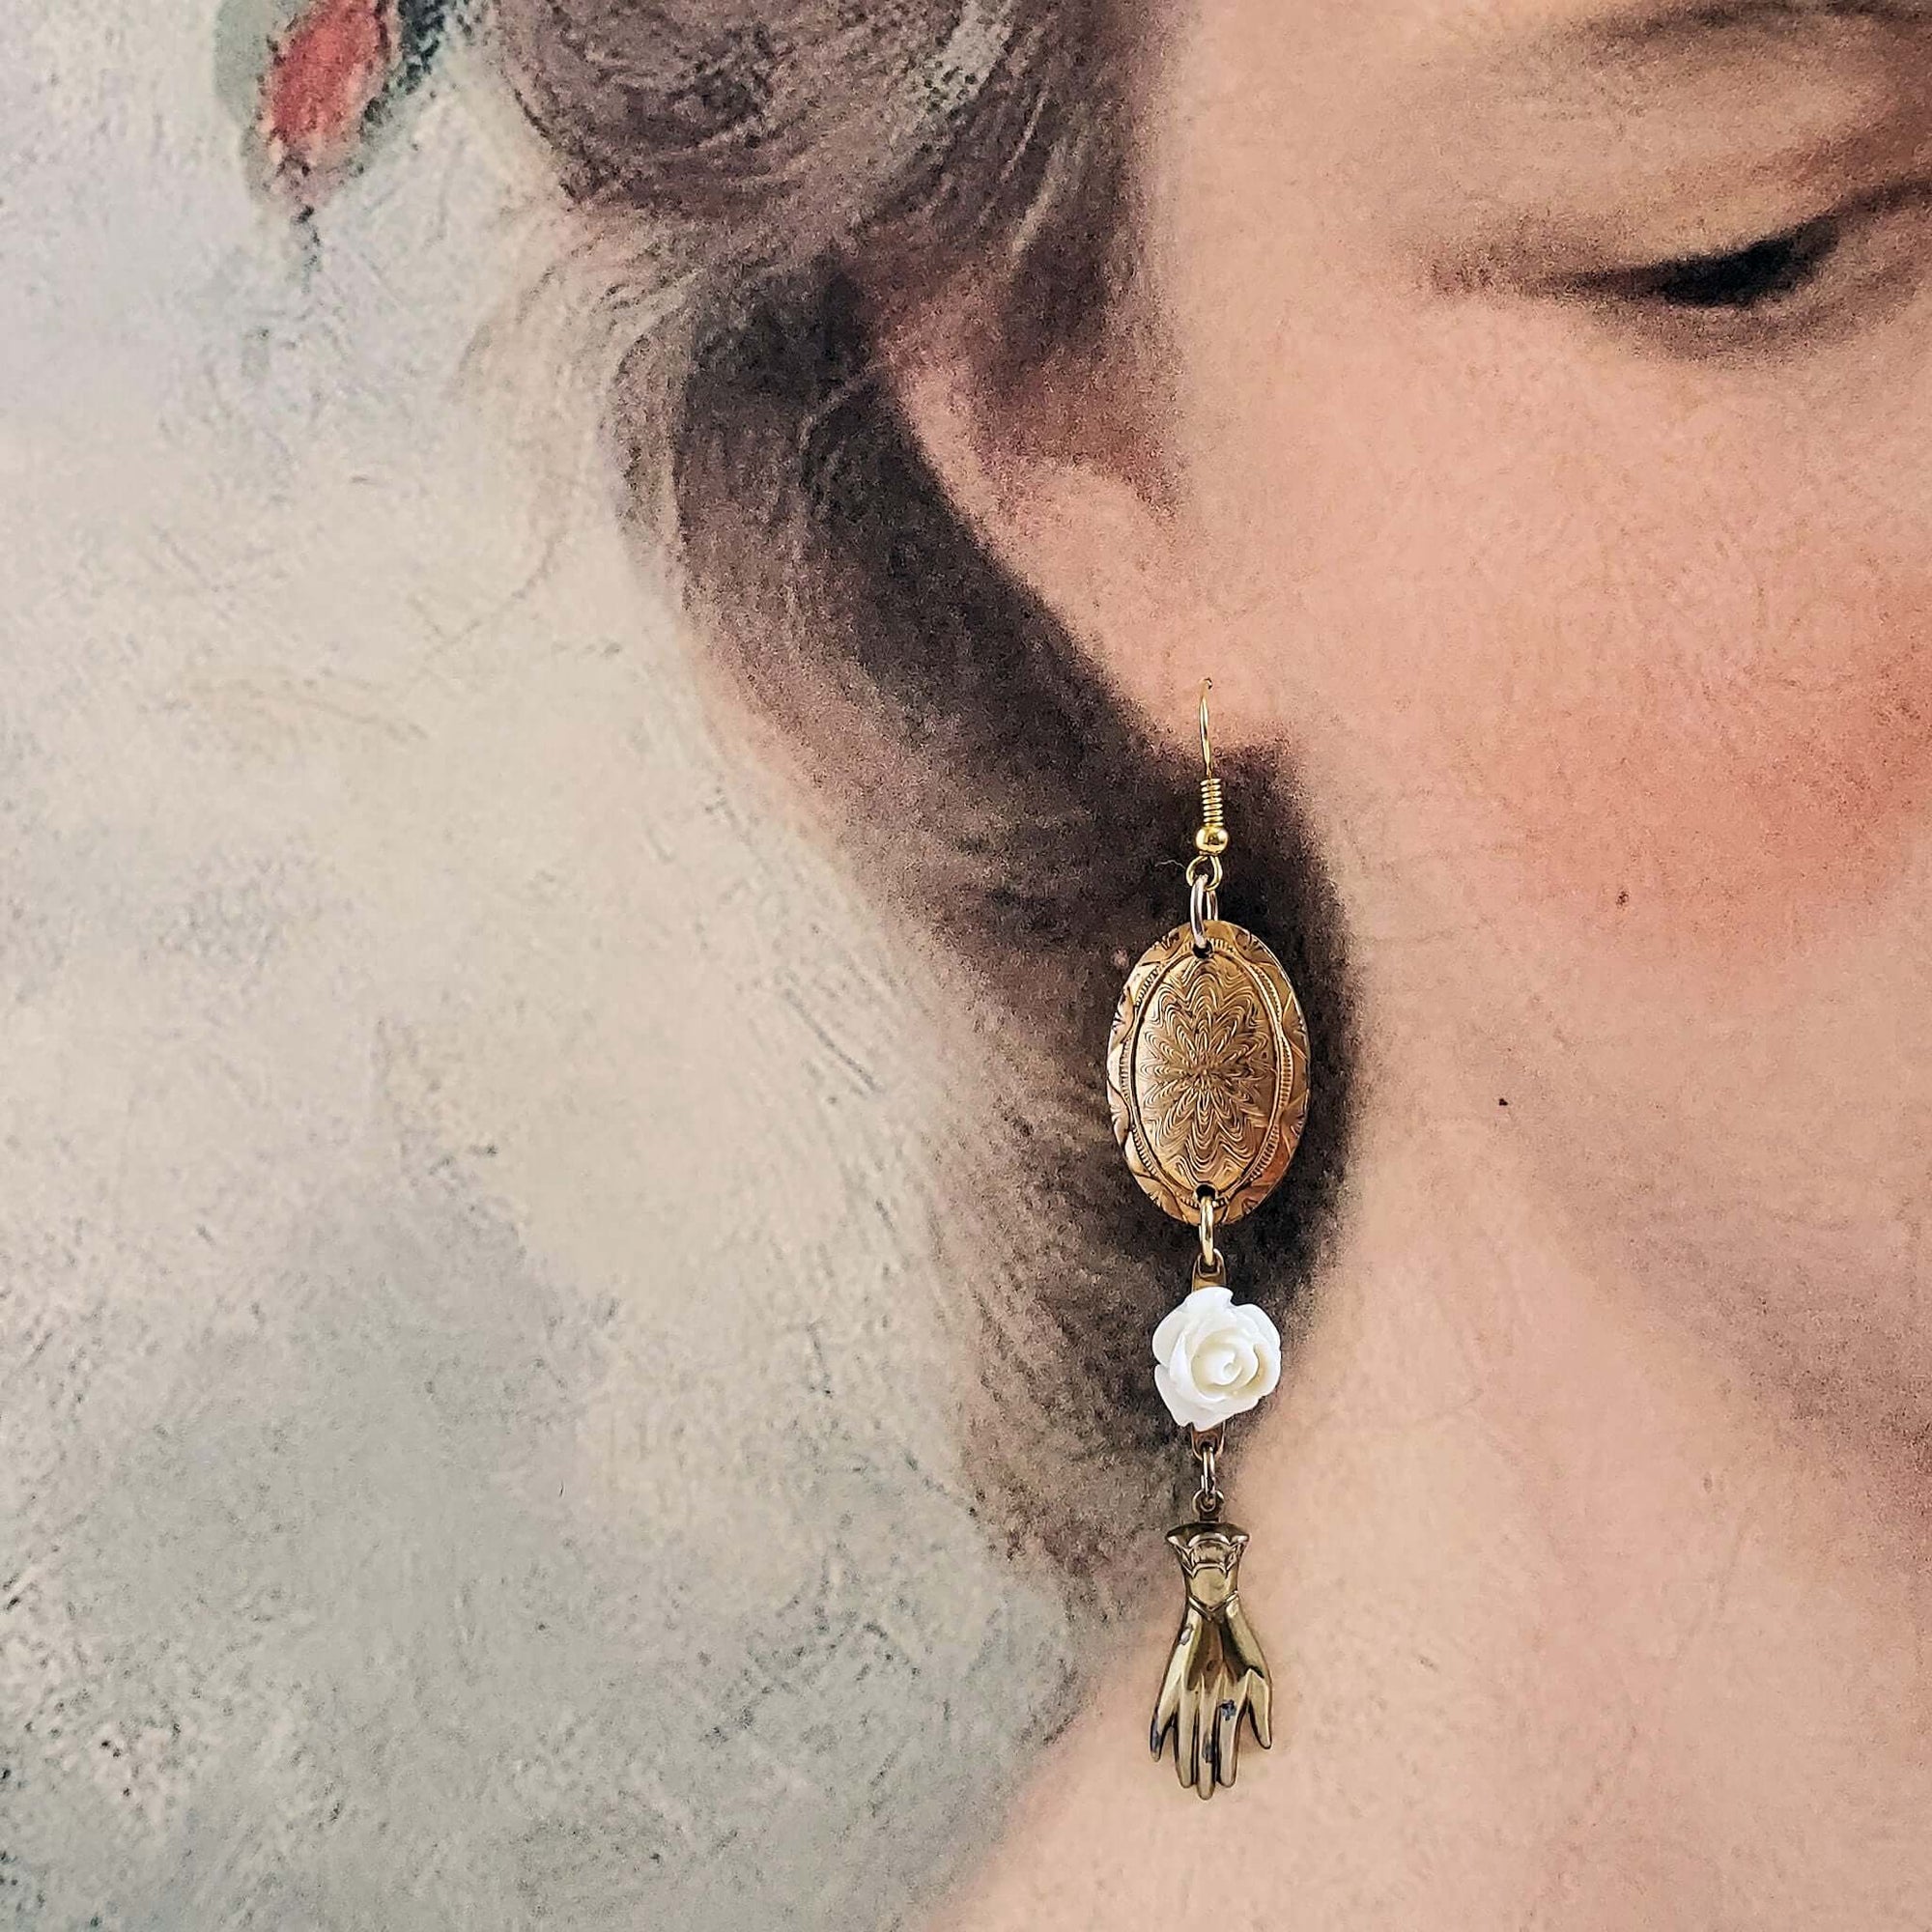 GRACE IN BLOOM - Vintage Victorian Hand Earrings